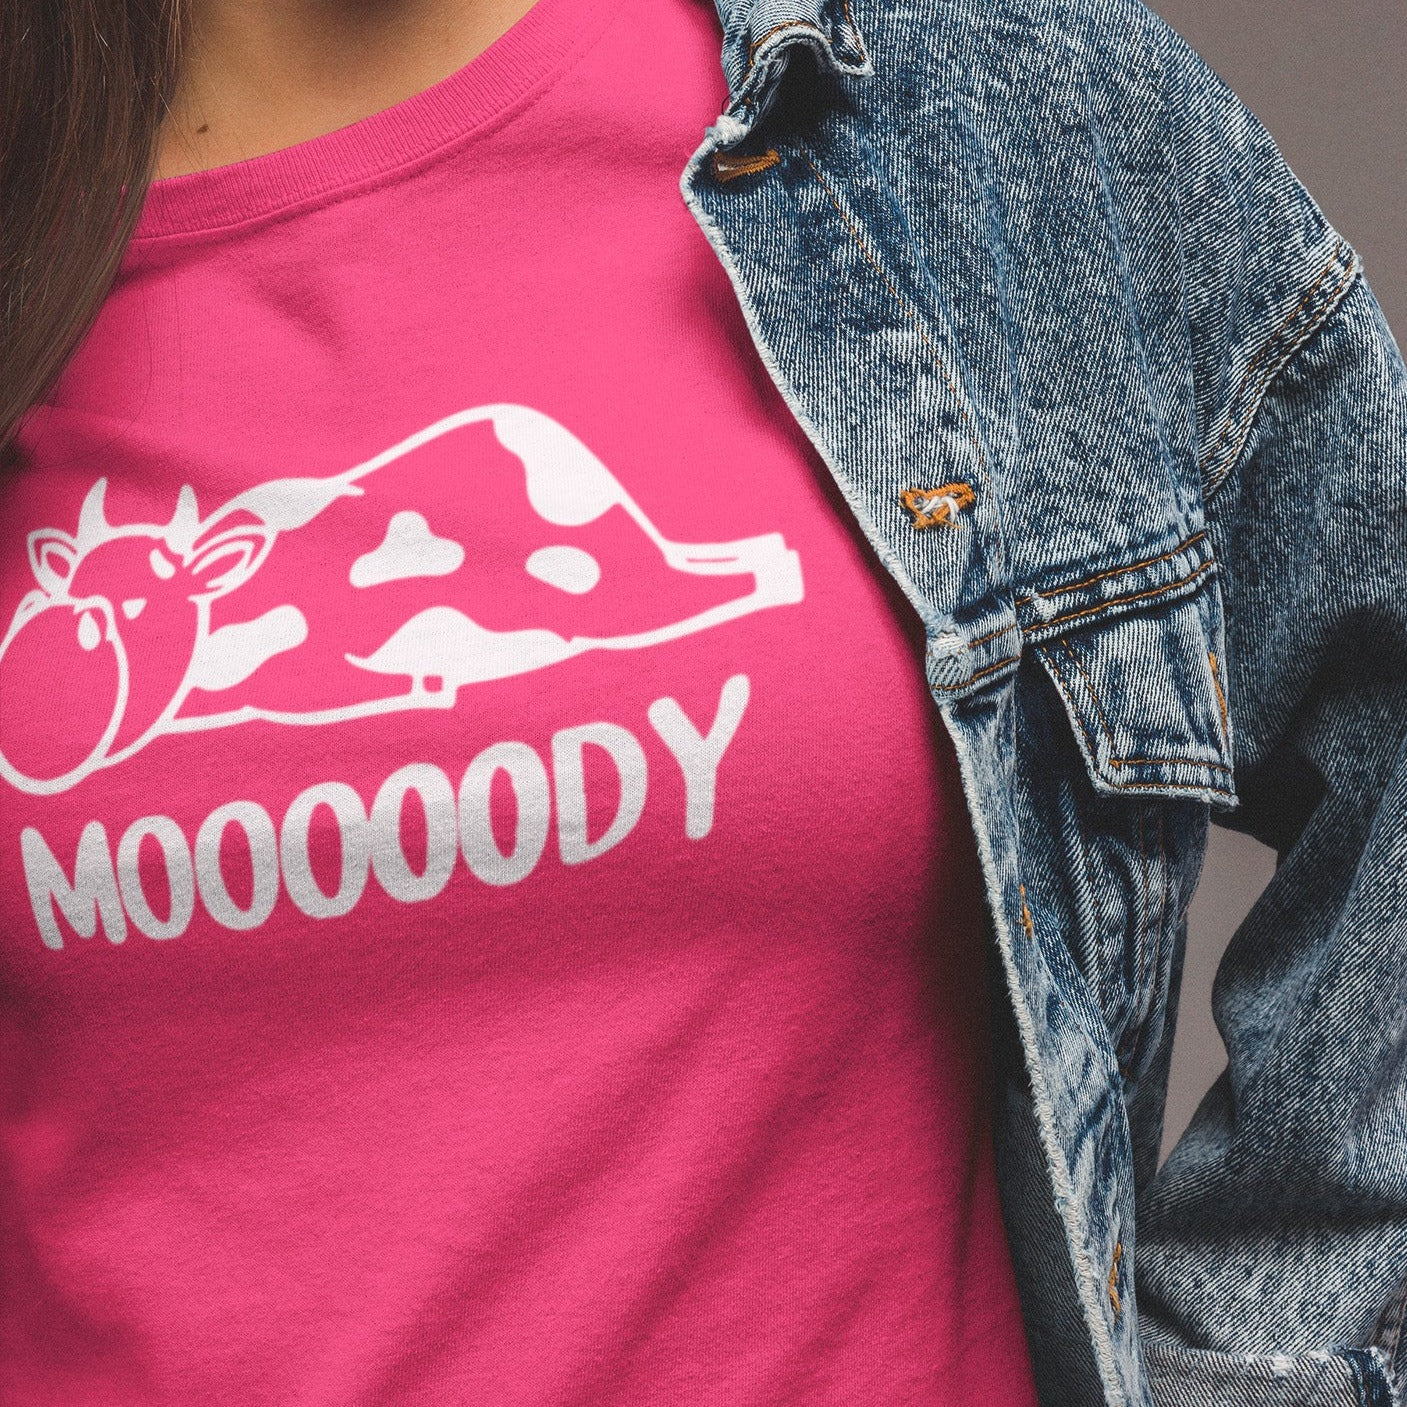 Mooooody-cow-farm-berry-t-shirt-funny-mockup-of-a-woman-wearing-a-denim-jacket